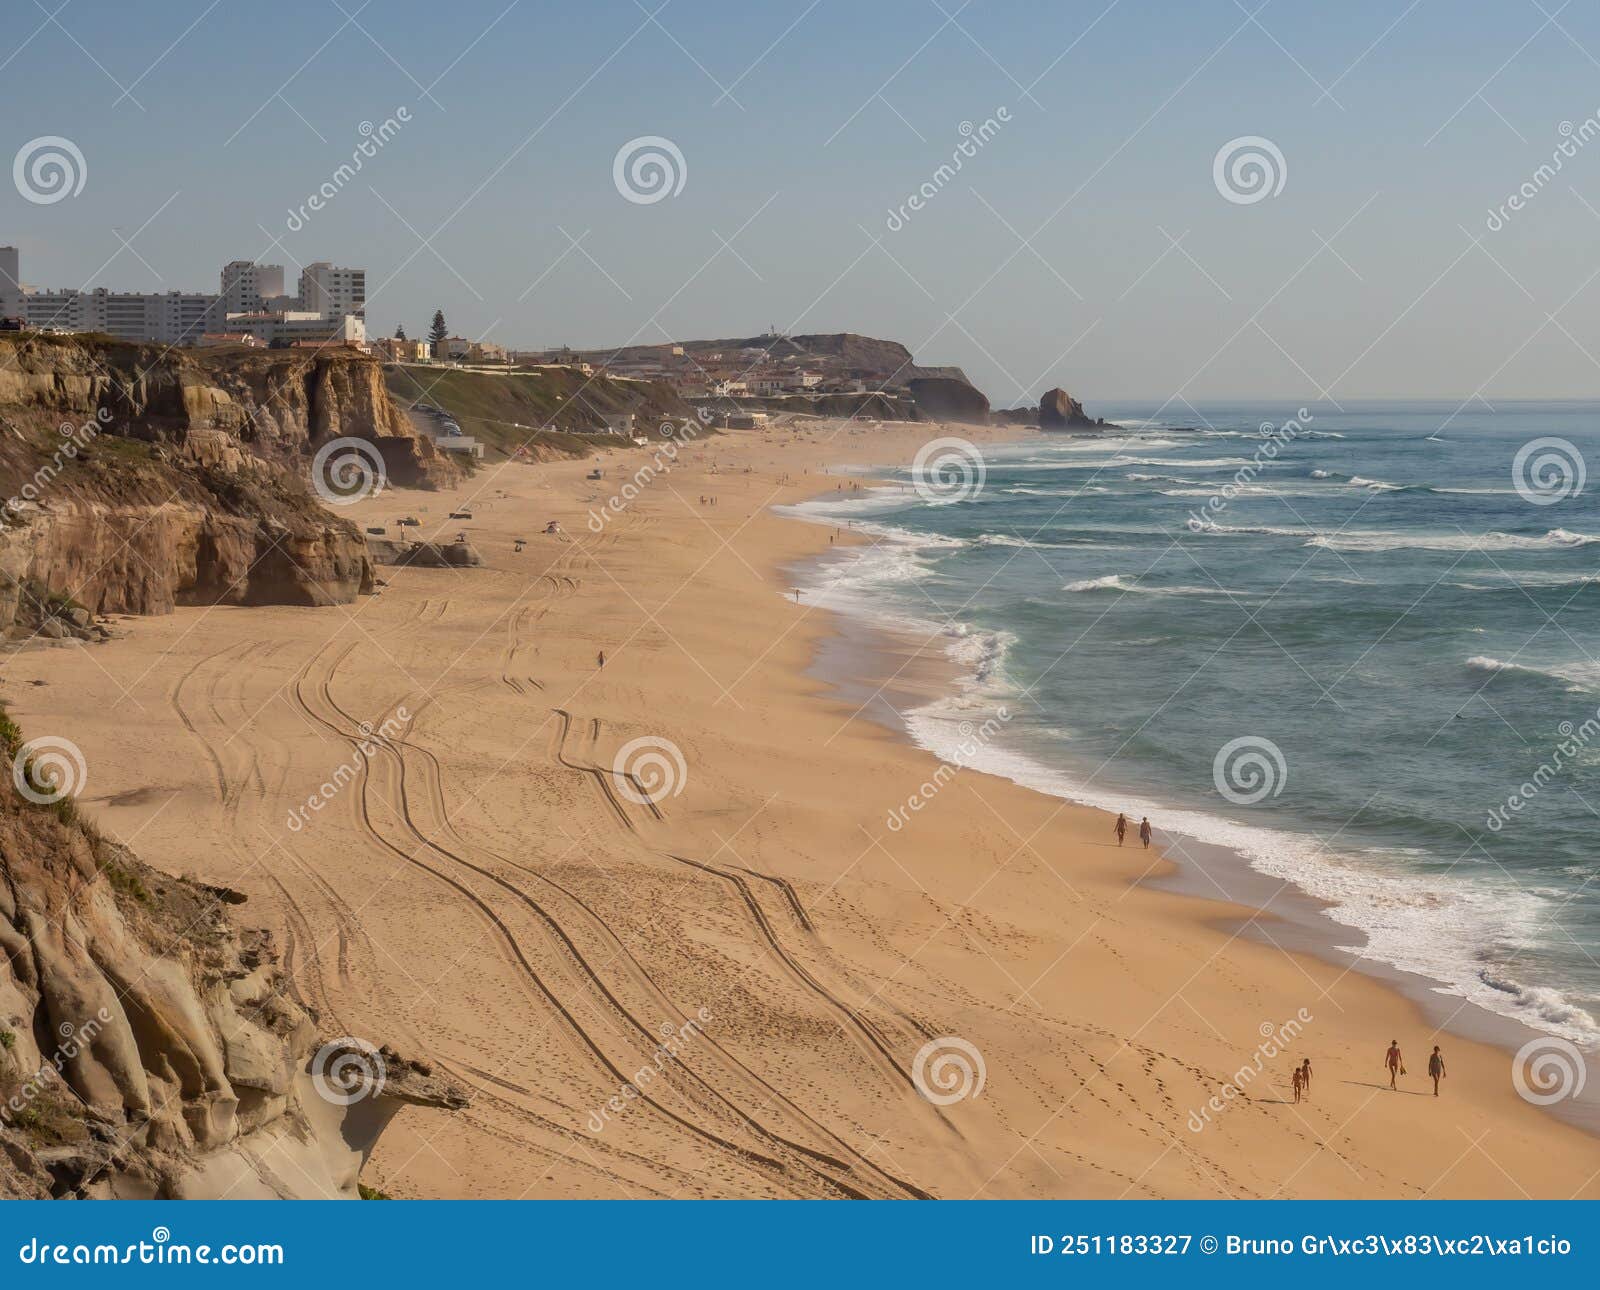 praia da vigia (vigia's beach),santa cruz, silveira, torres vedras, portugal